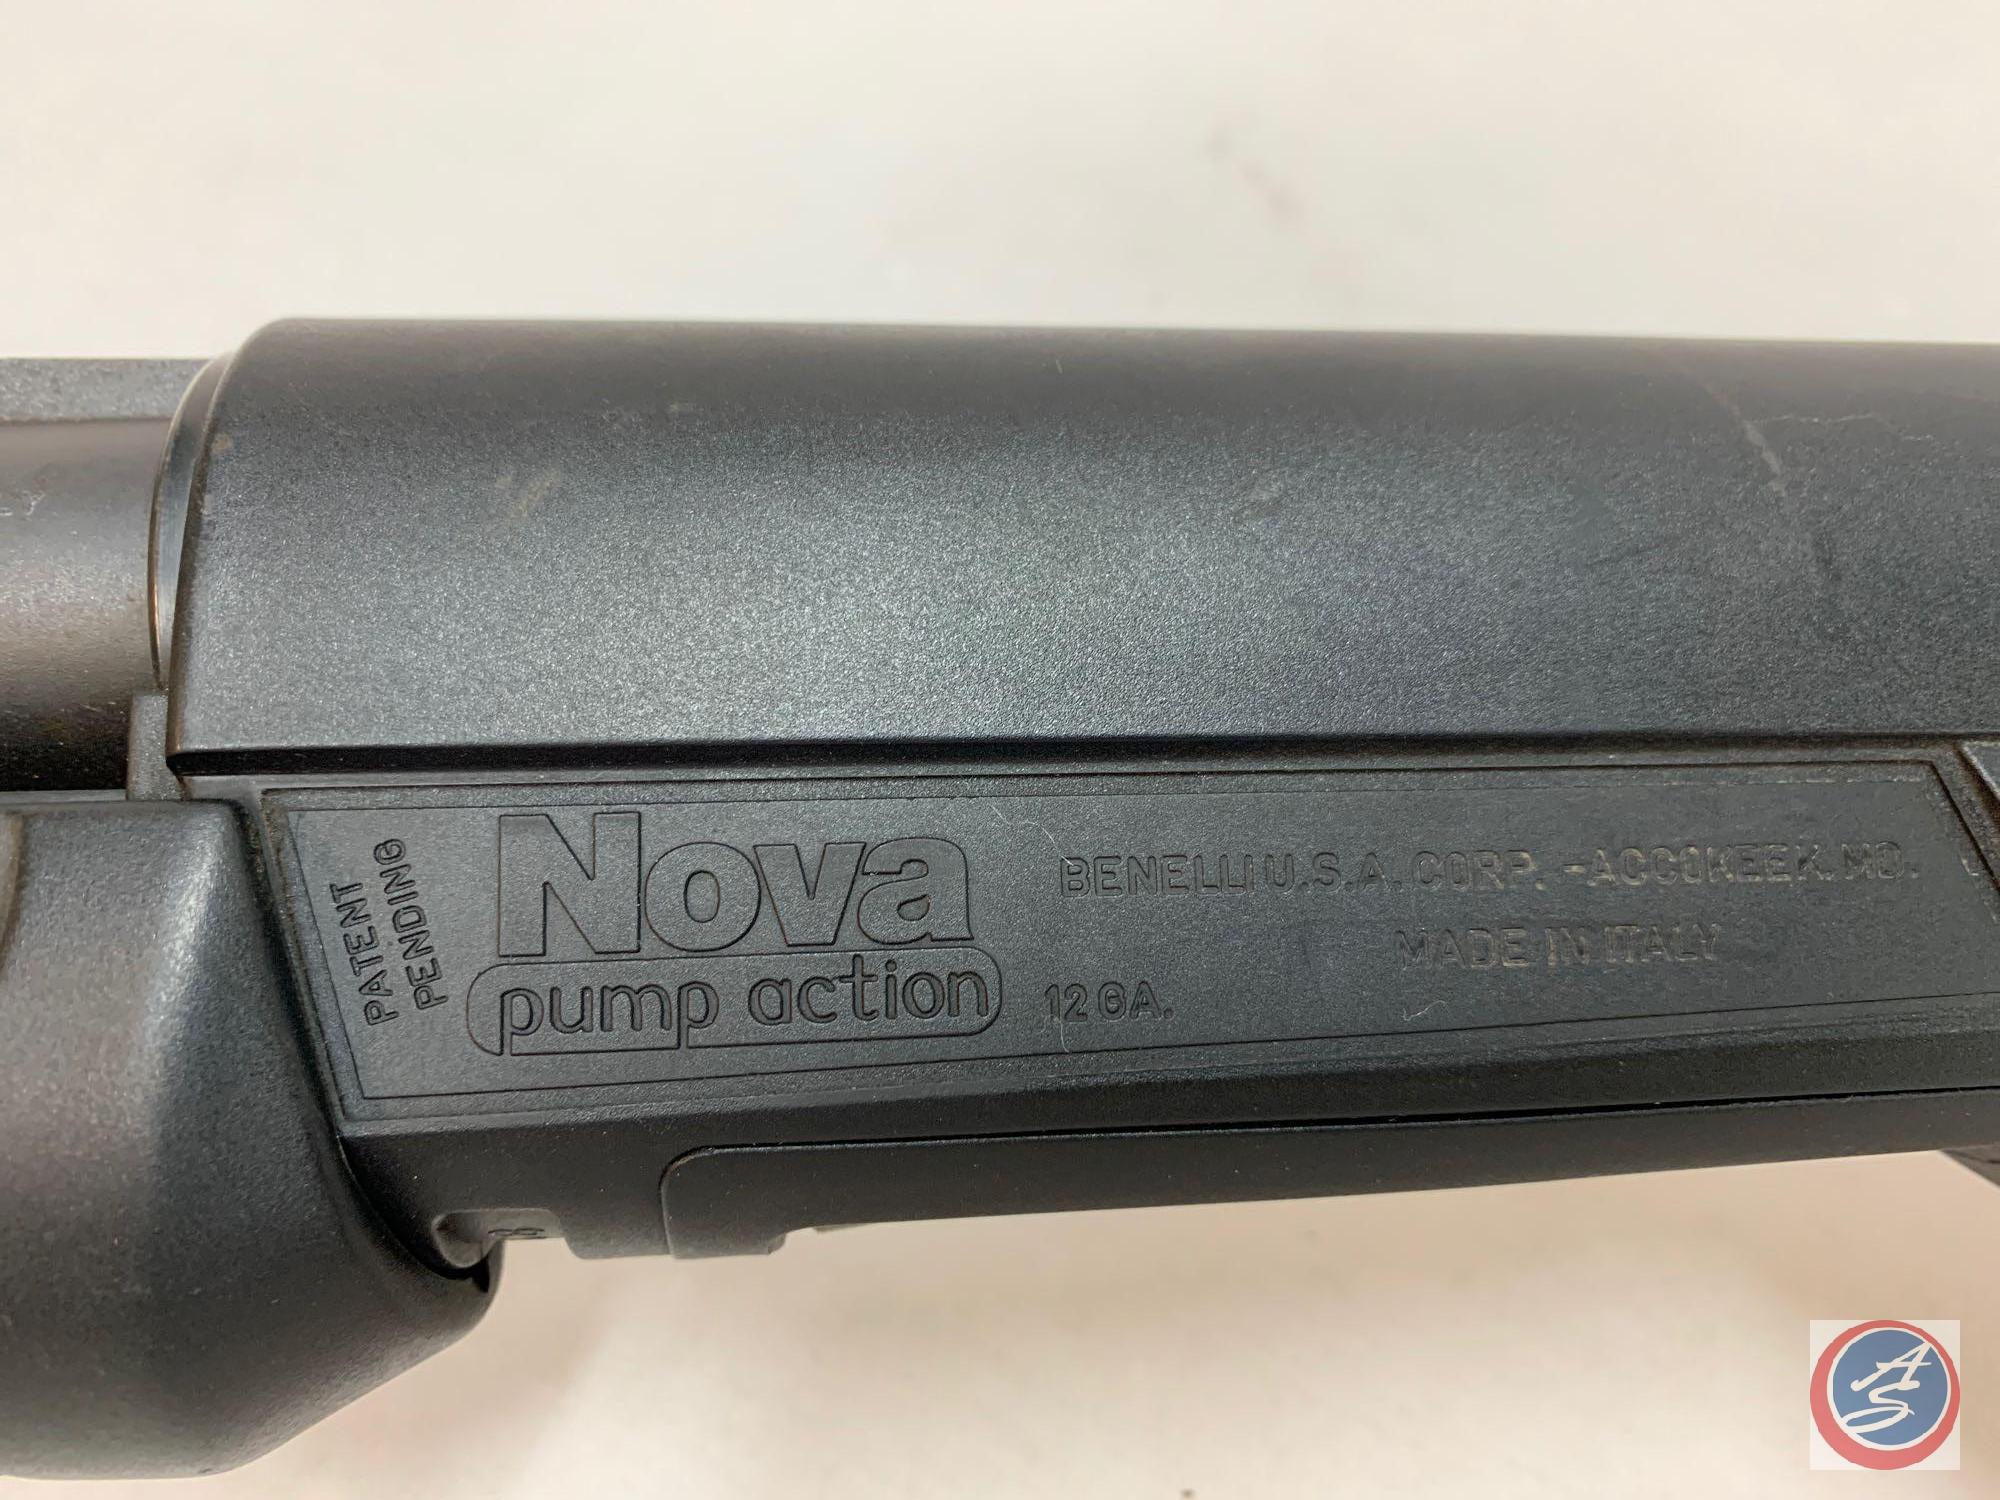 Benelli Model Nova 12 GA 3" Shotgun Pump Shotgun with 26 inch...barrel Ser #...Z030768